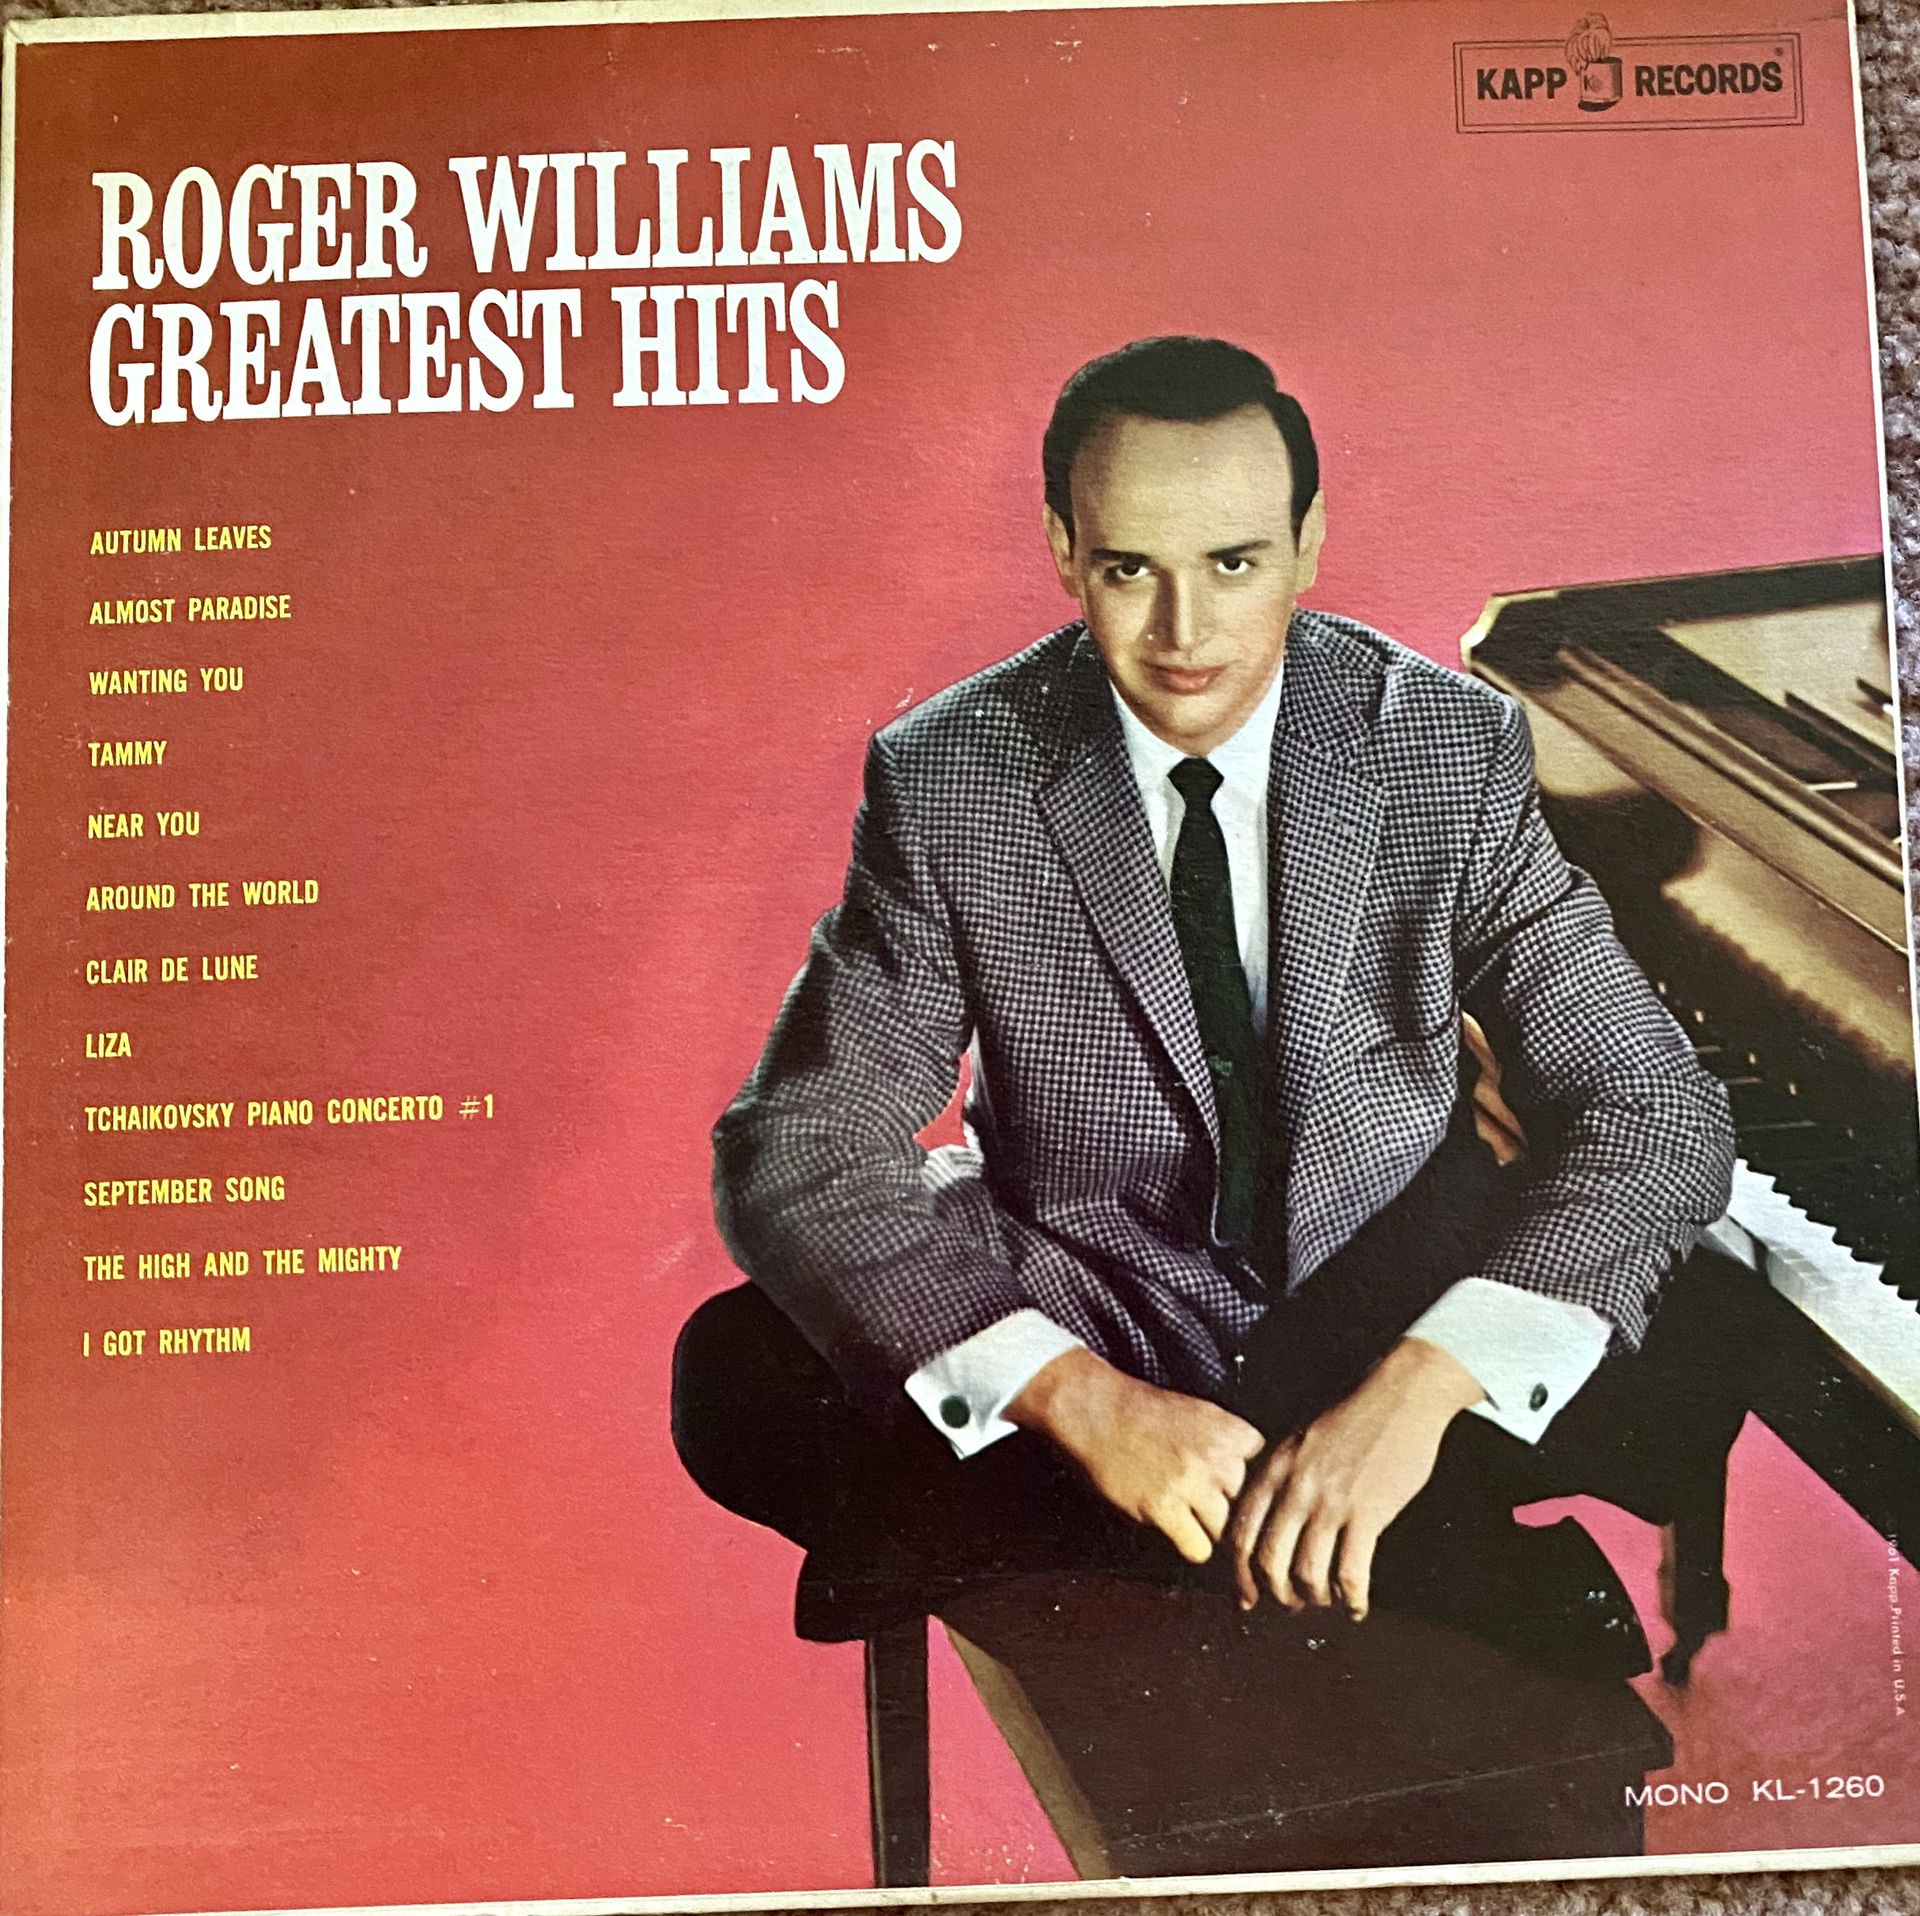 Roger Williams “Greatest Hits” Vinyl Album $12